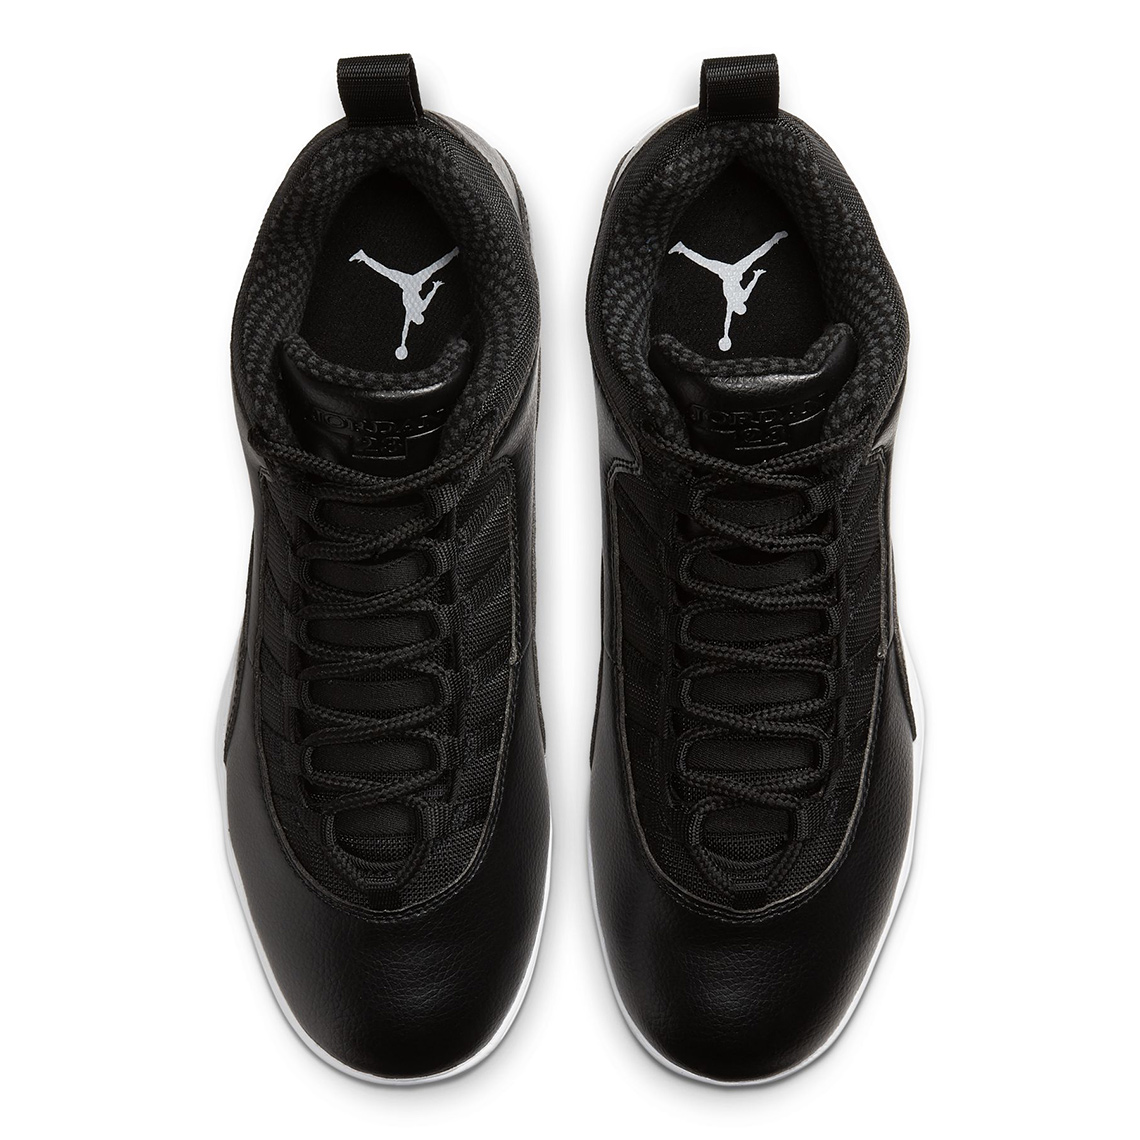 Air Jordan 10 Cleat Black Release Info 2